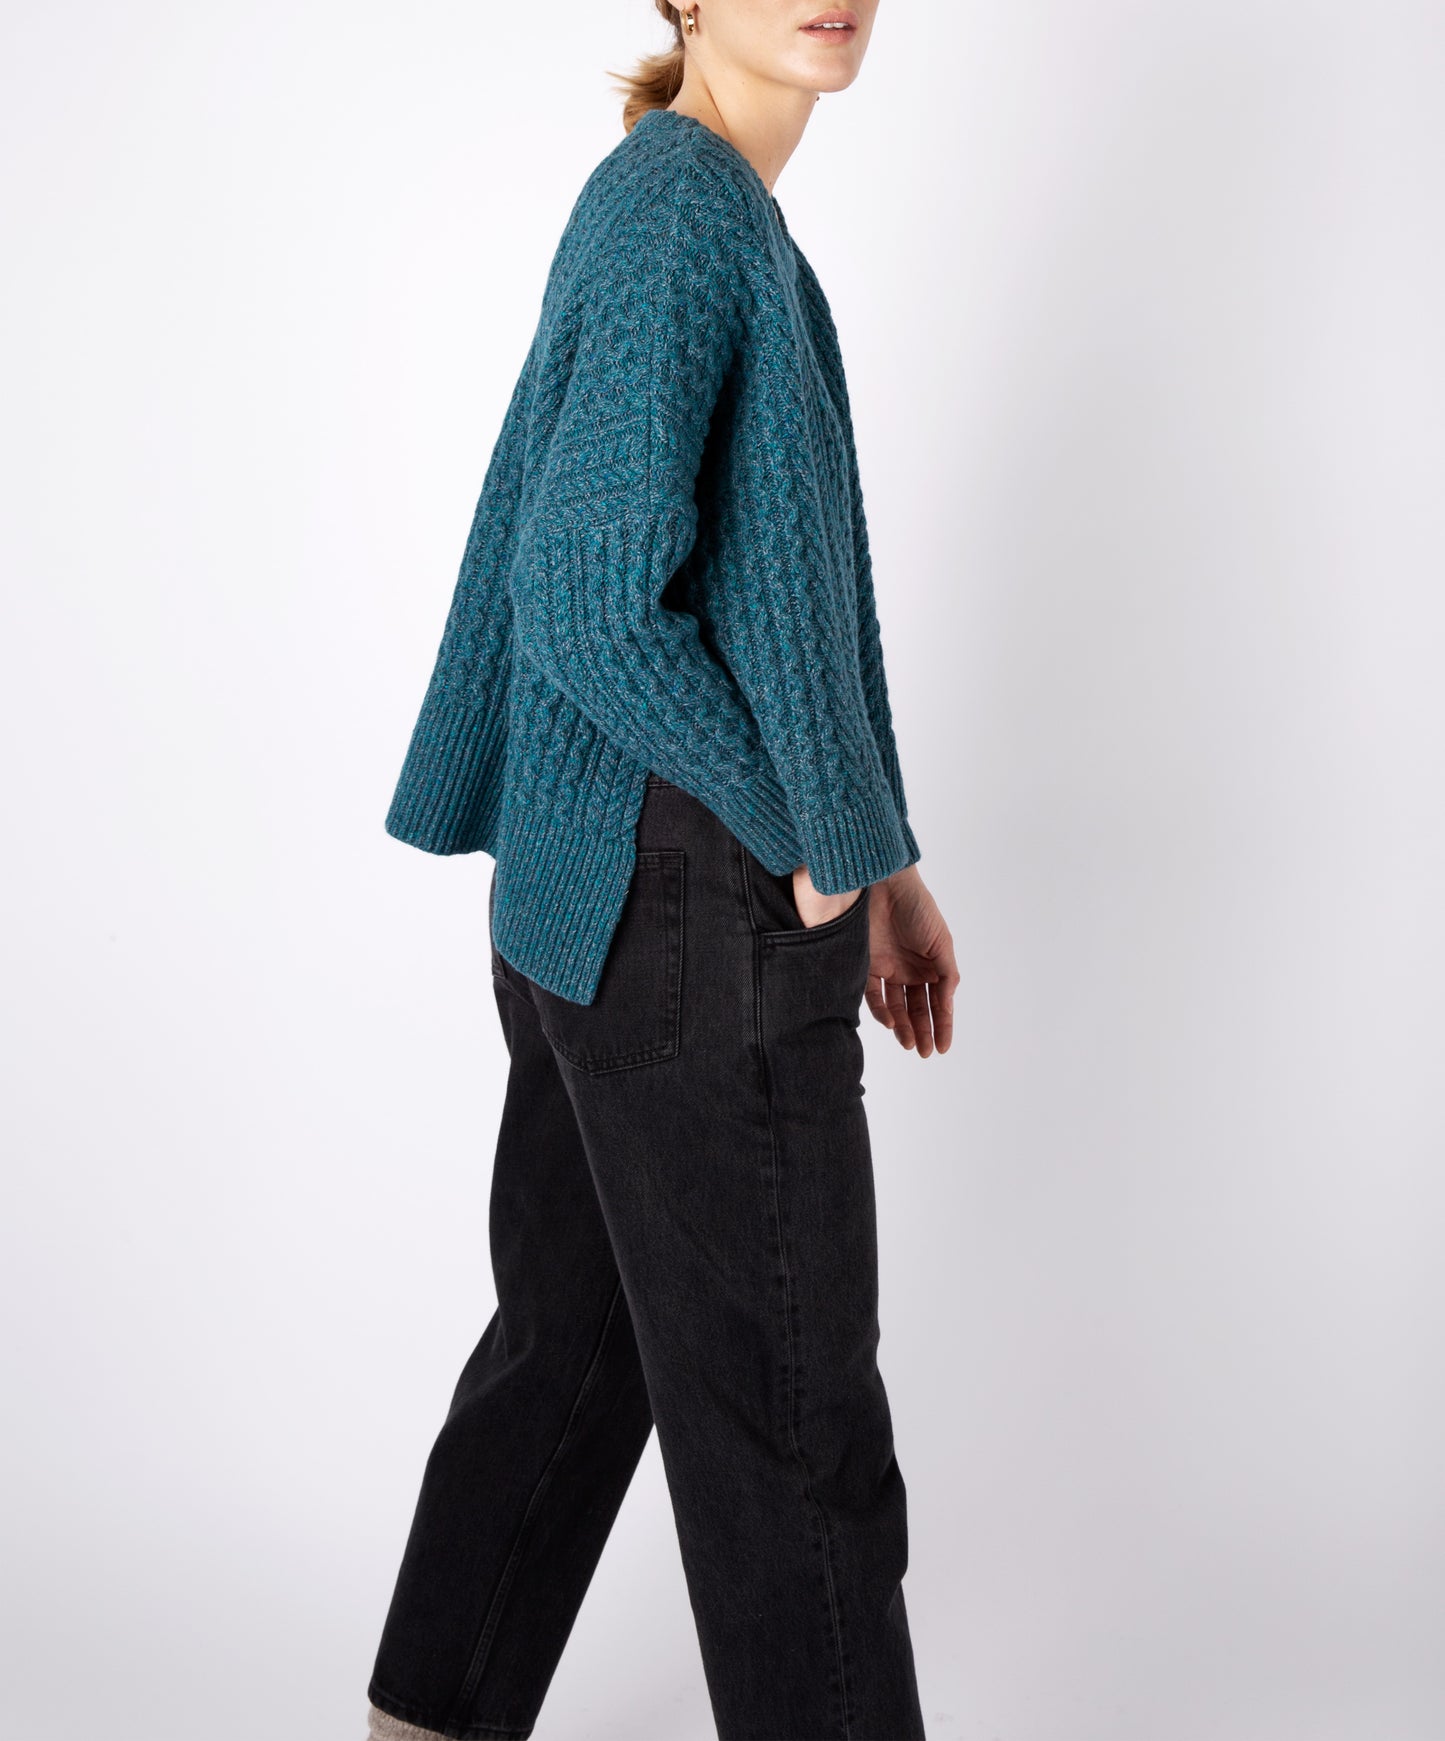 IrelandsEye Knitwear Women's Knitted 'Sorrell' Cropped Aran Sweater Aquamarine